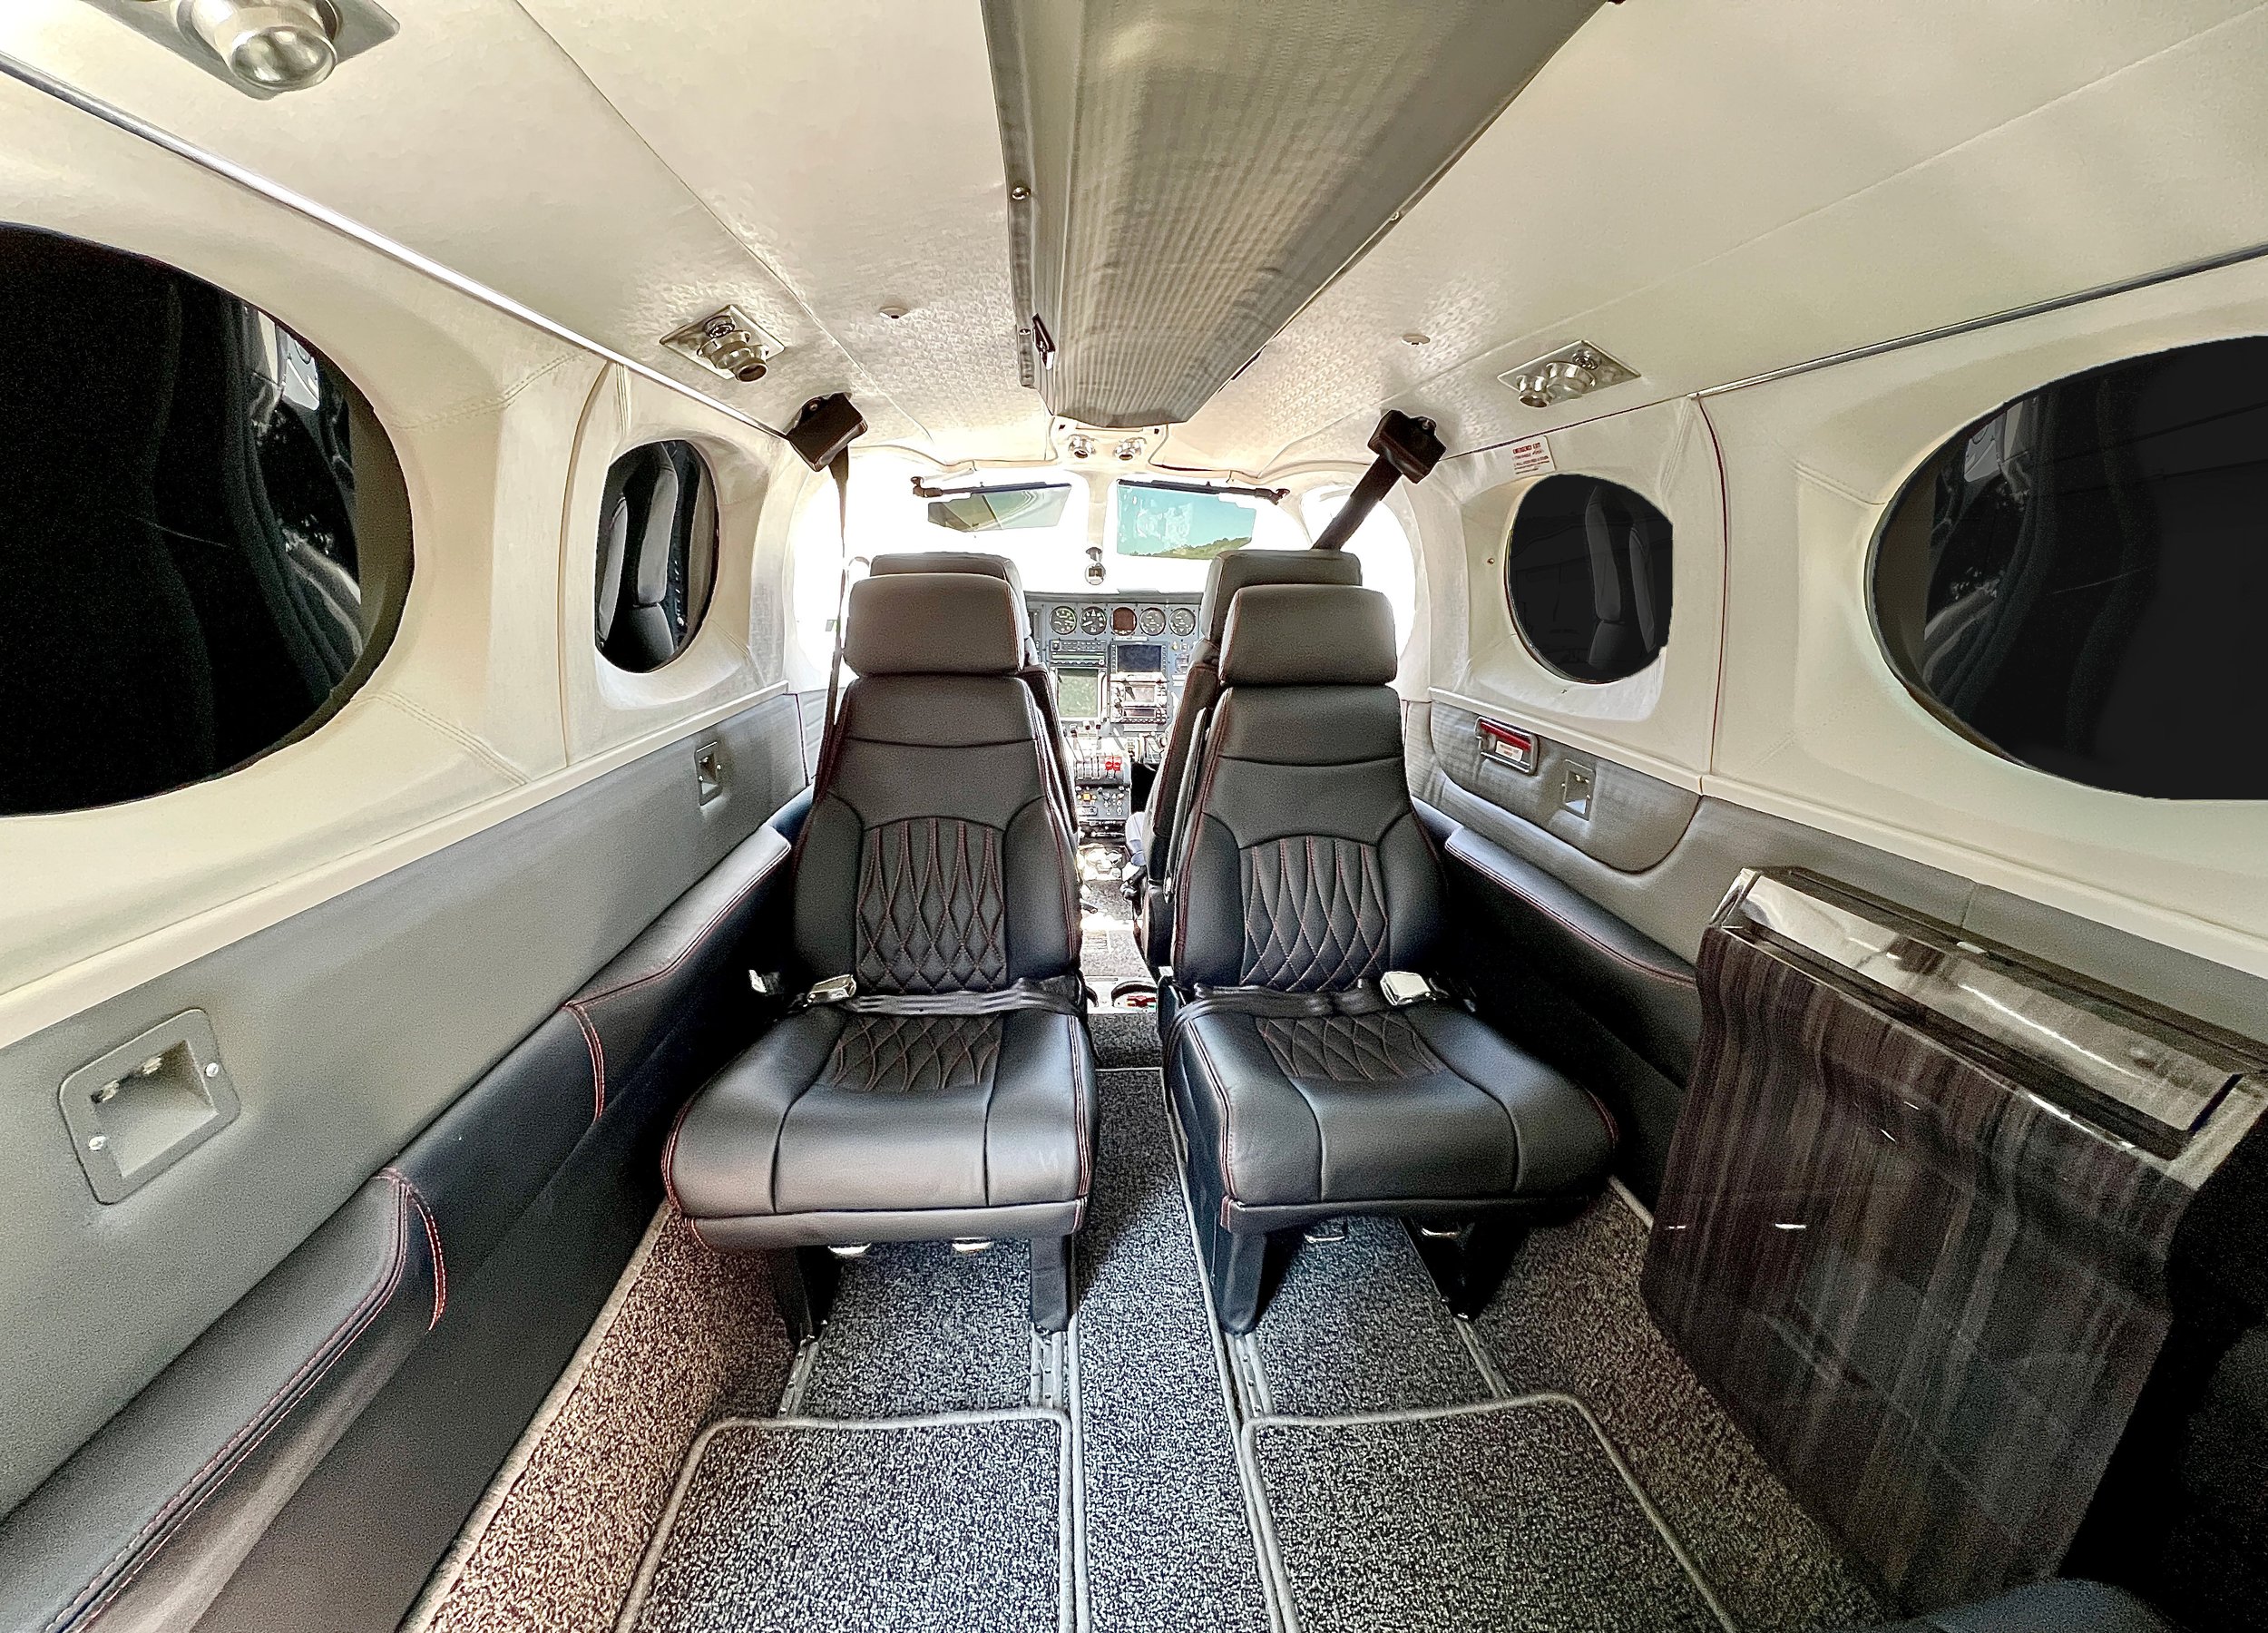 Cessna 340 interior pic 1.jpg